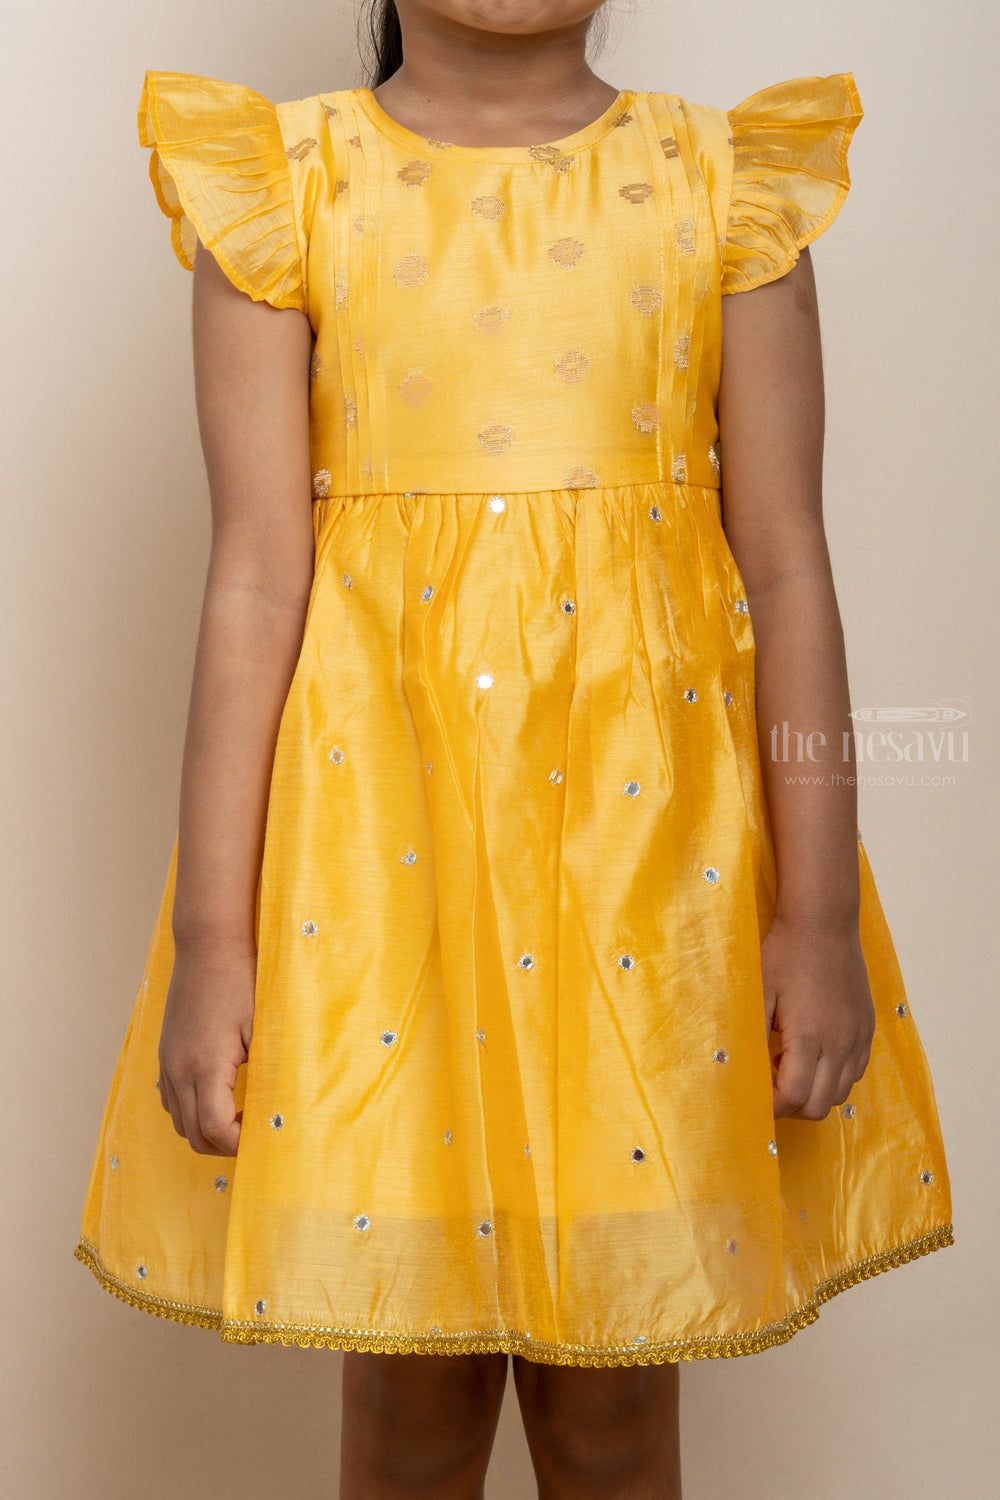 The Nesavu Frocks & Dresses Exemplary Yellow - Cottony Cute Frocks With Mirrors And Gold Puttas psr silks Nesavu